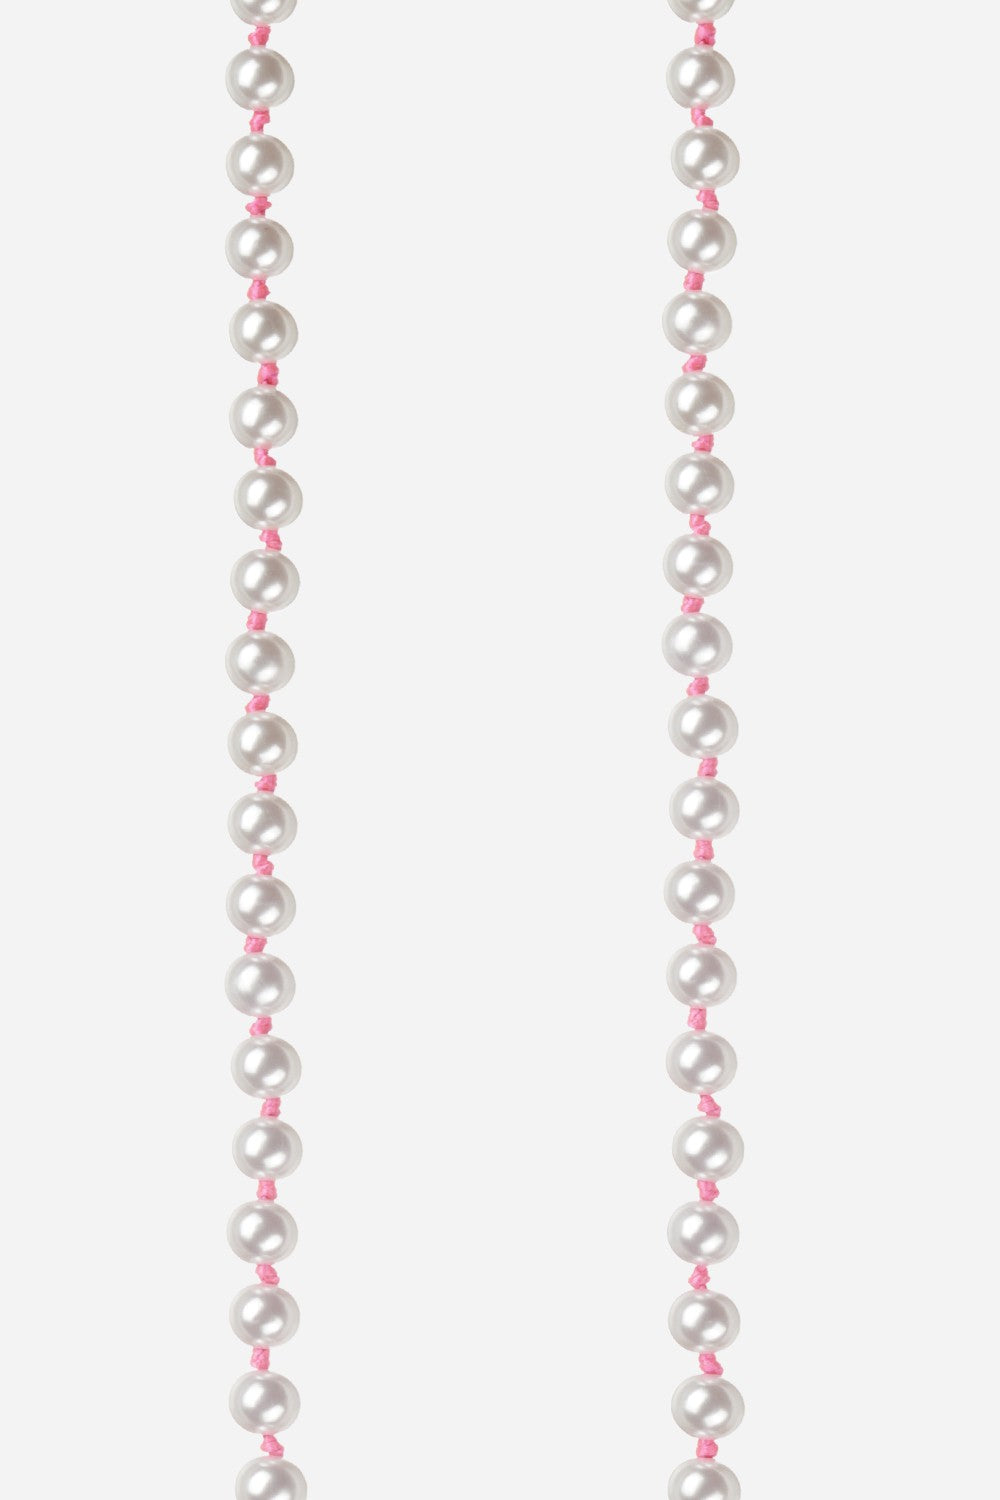 Long Naomie Chain White 120 cm